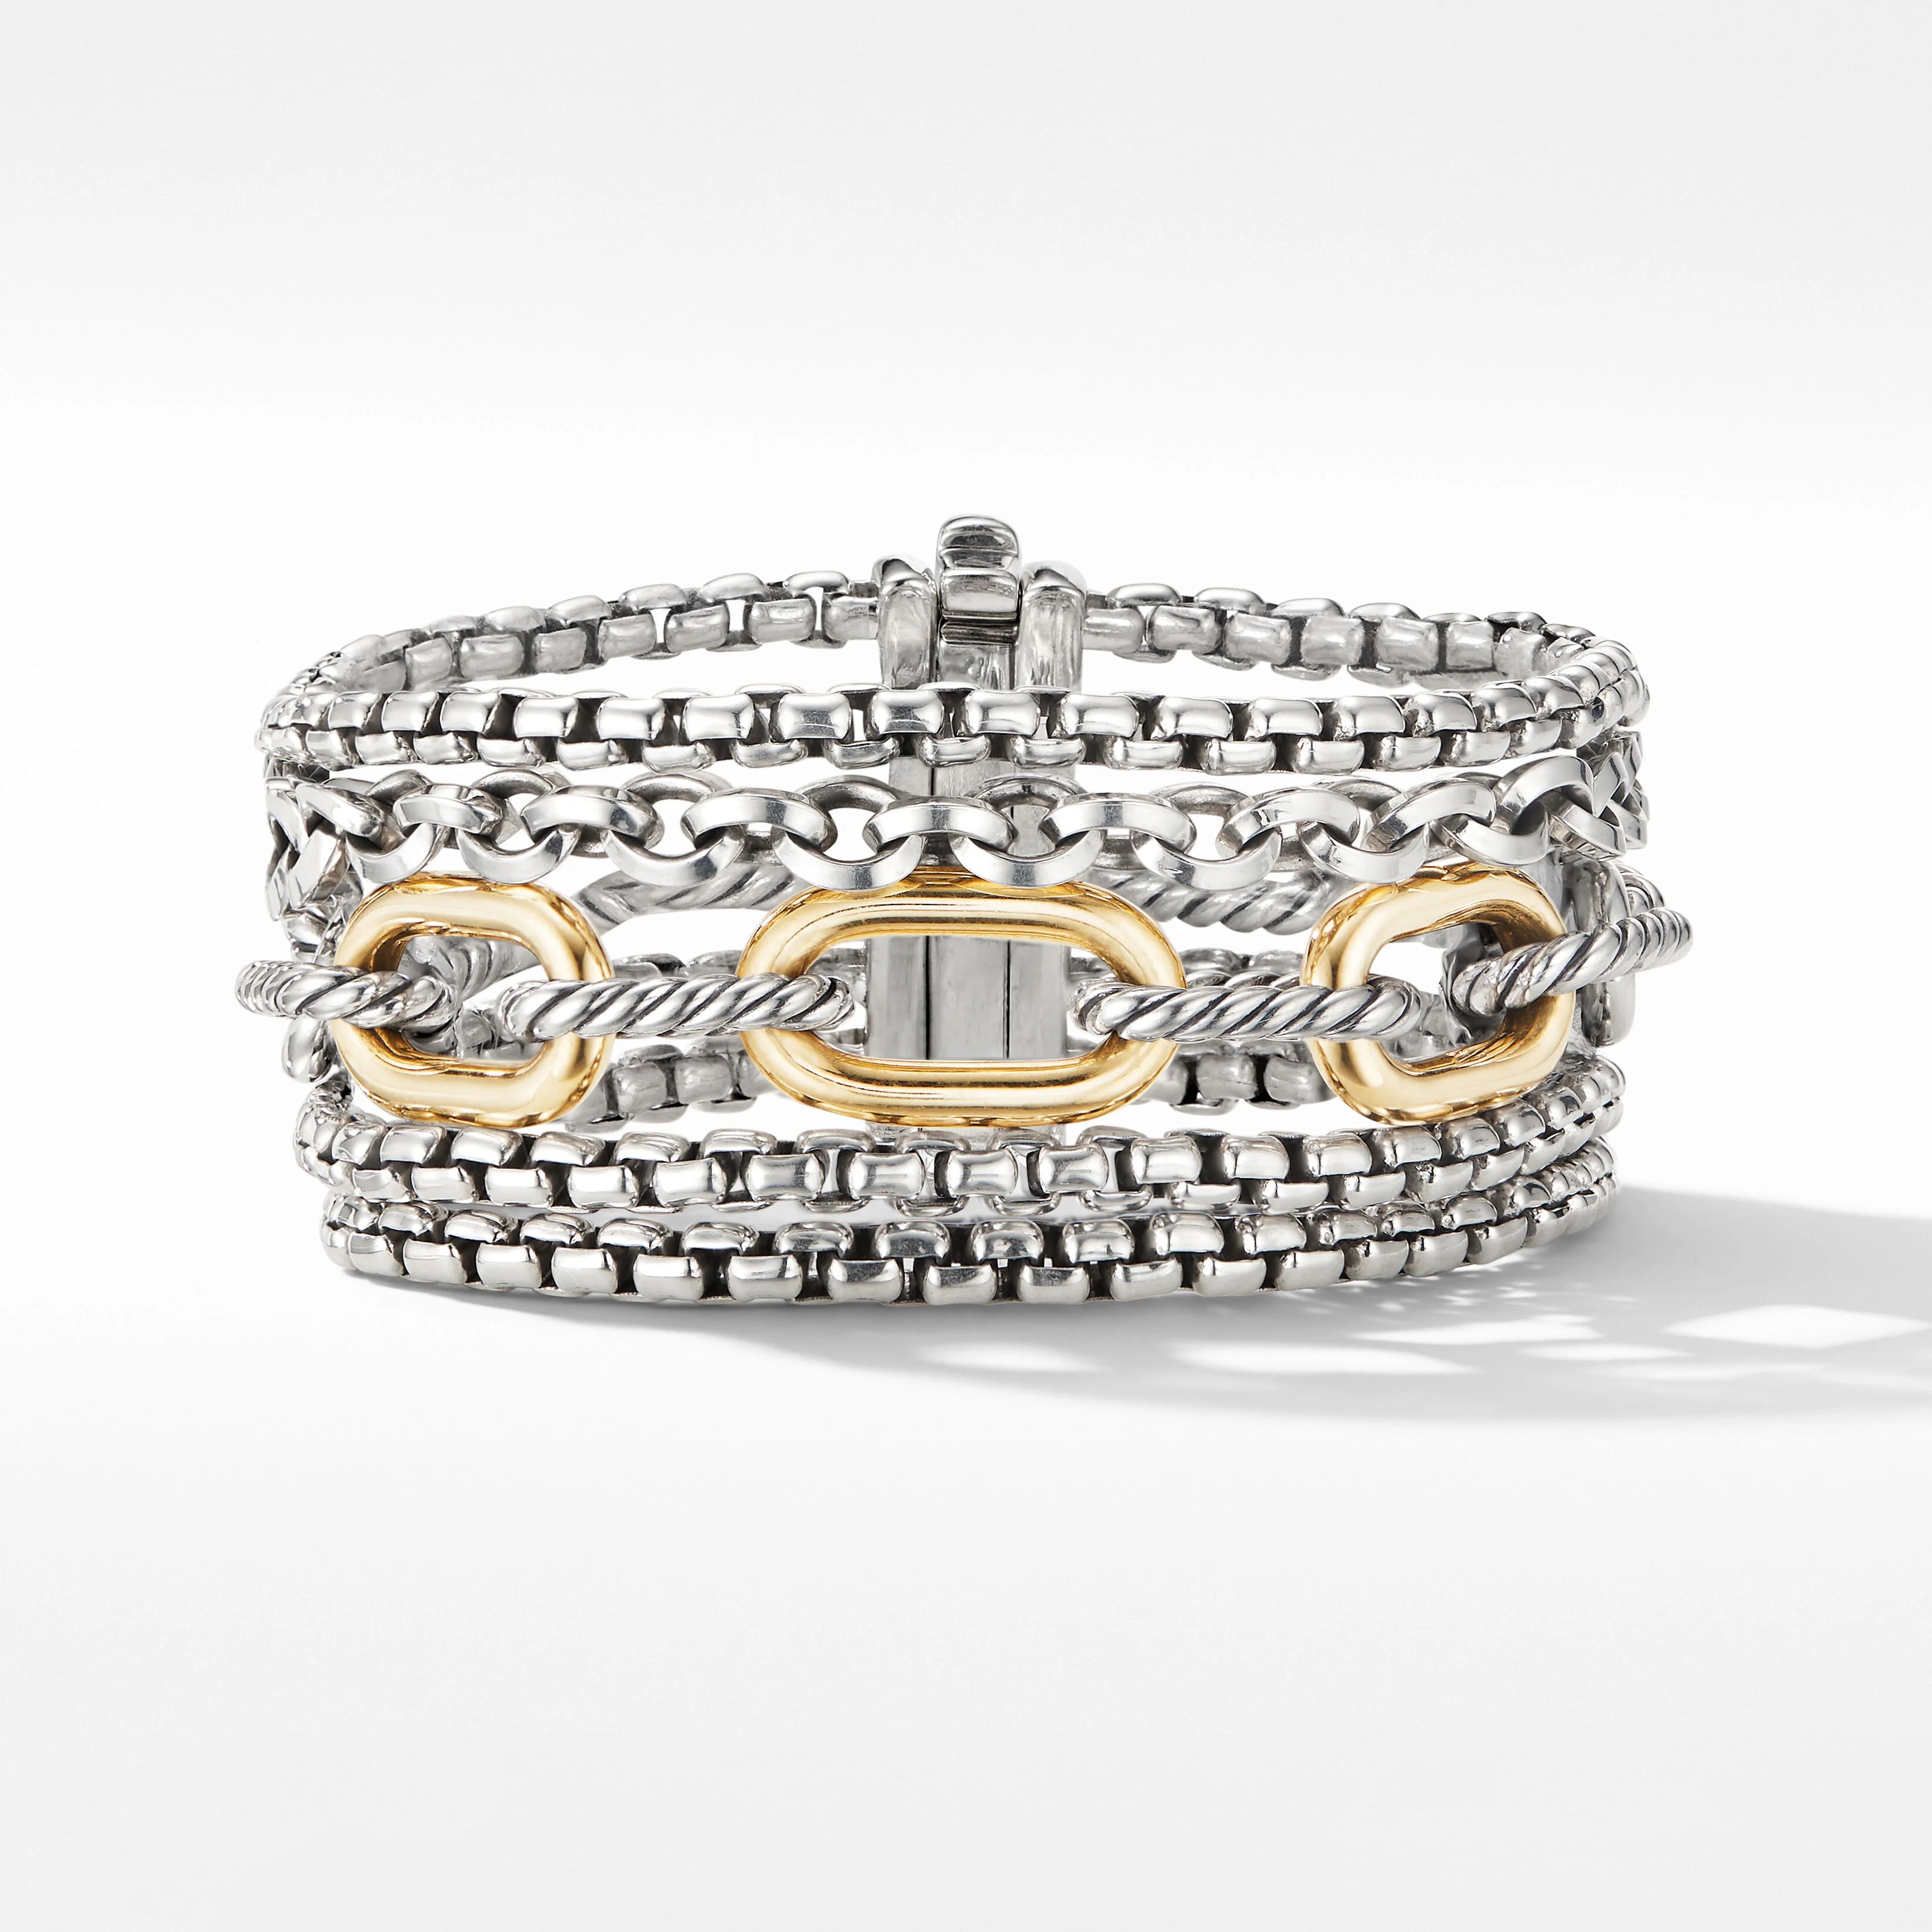 Multi Row Chain Bracelet in Sterling Silver with 18K Yellow Gold | David Yurman